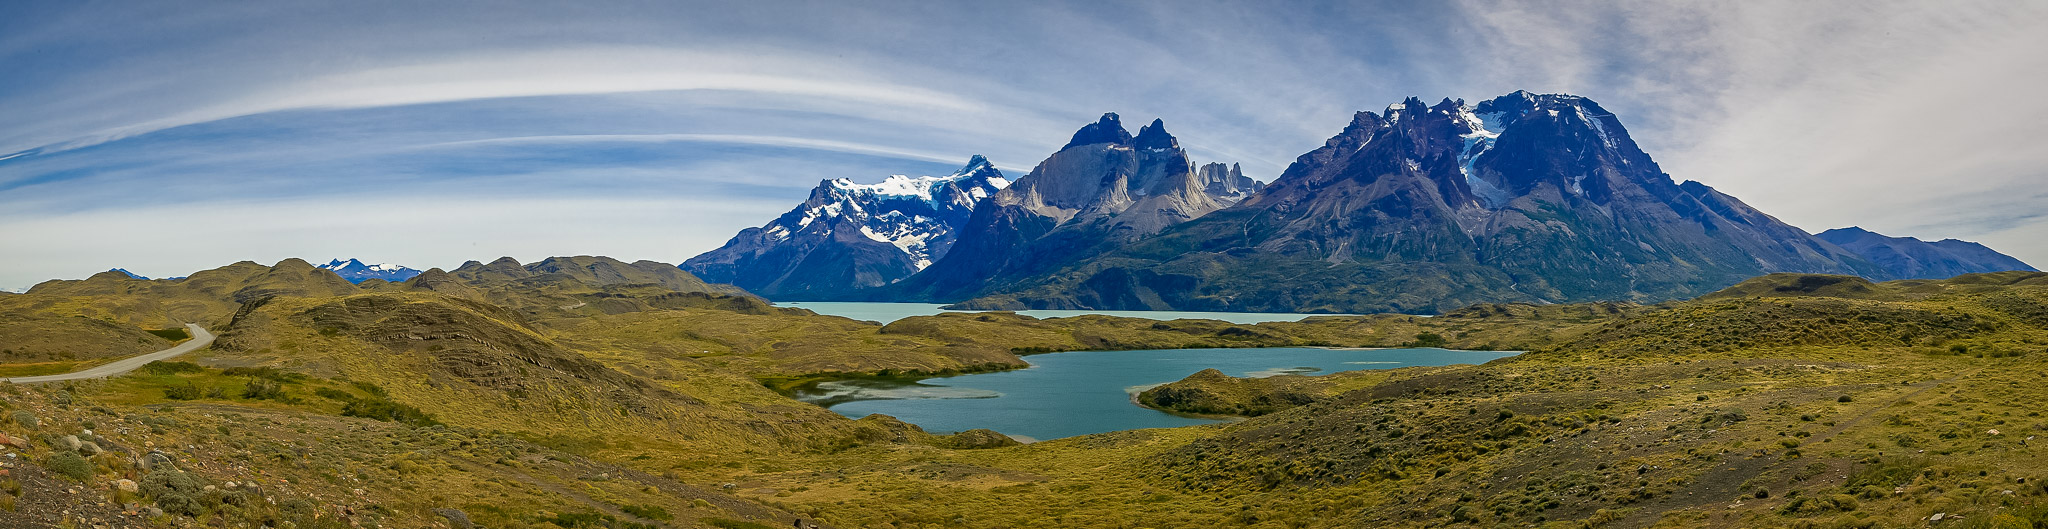 Torres del Paine from across Lago Nordenskjold